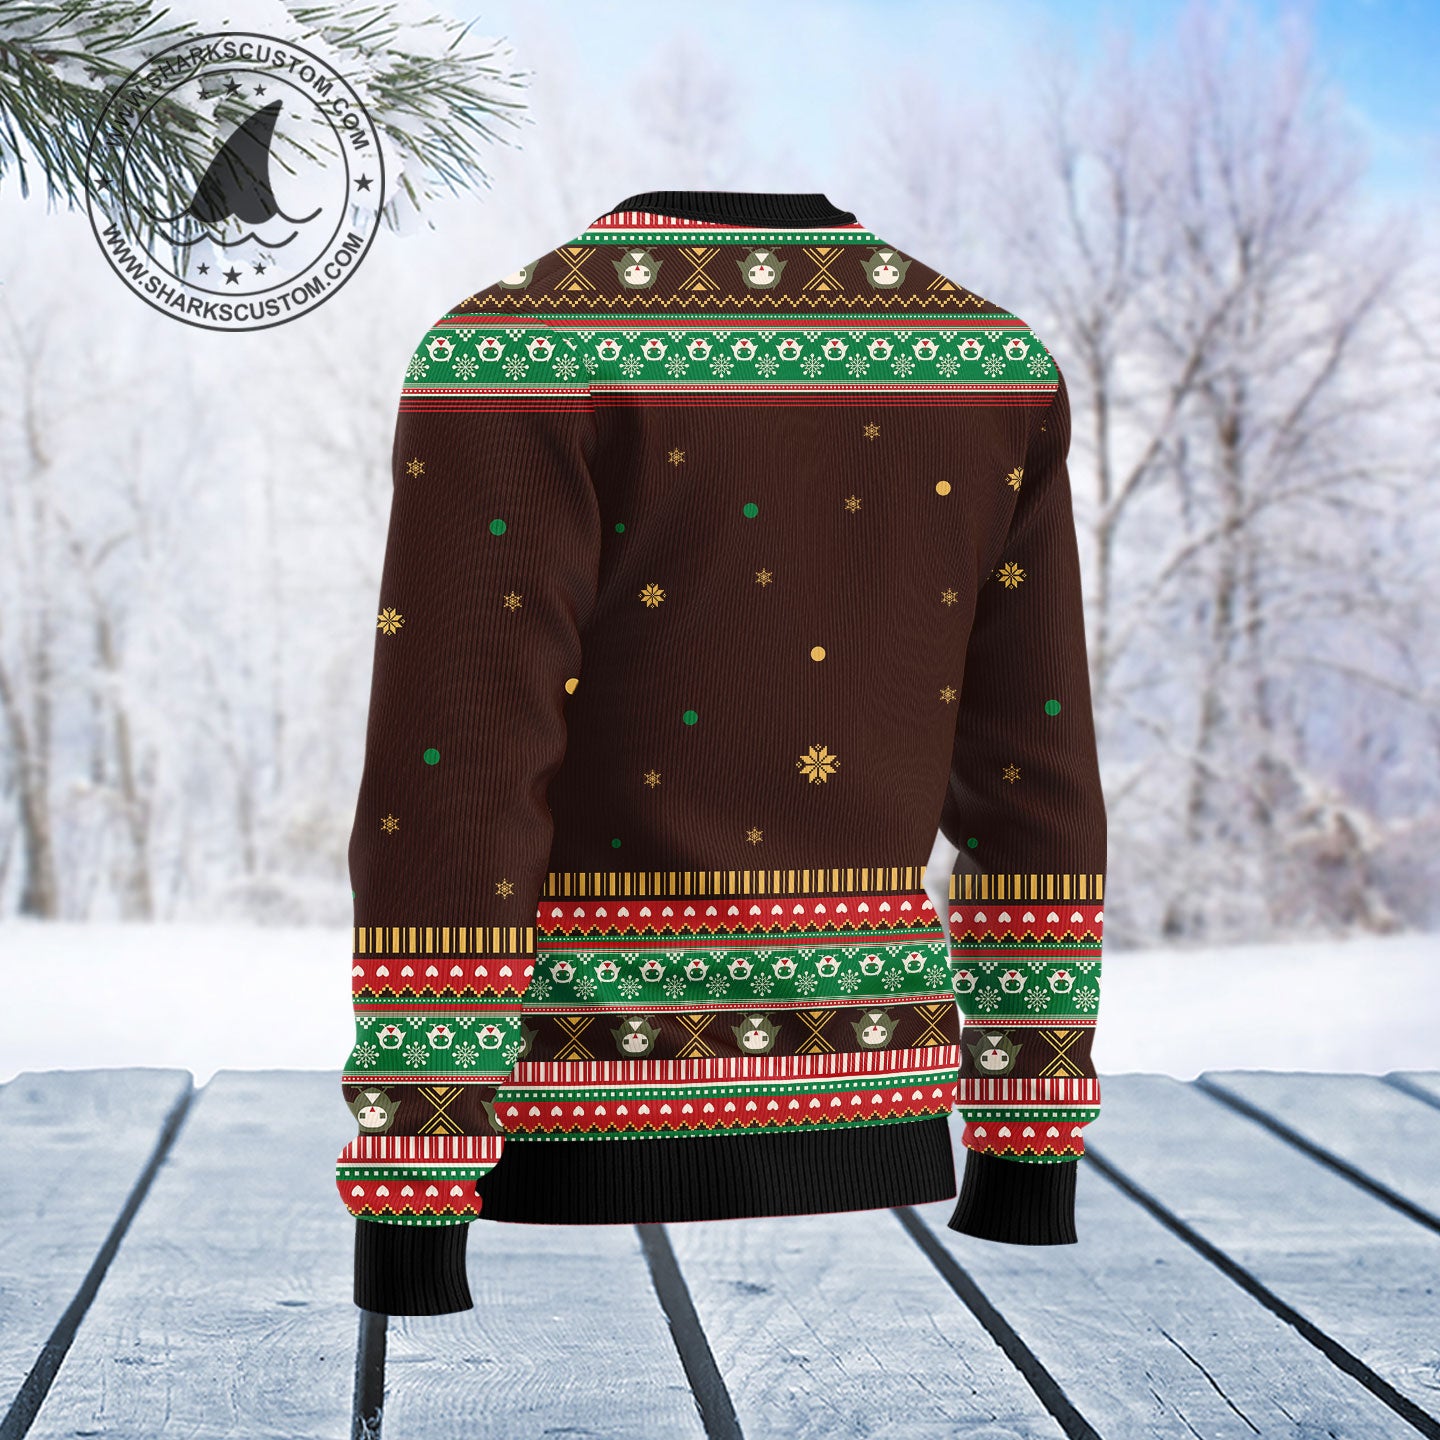 Owl Beautiful T1111 Ugly Christmas Sweater